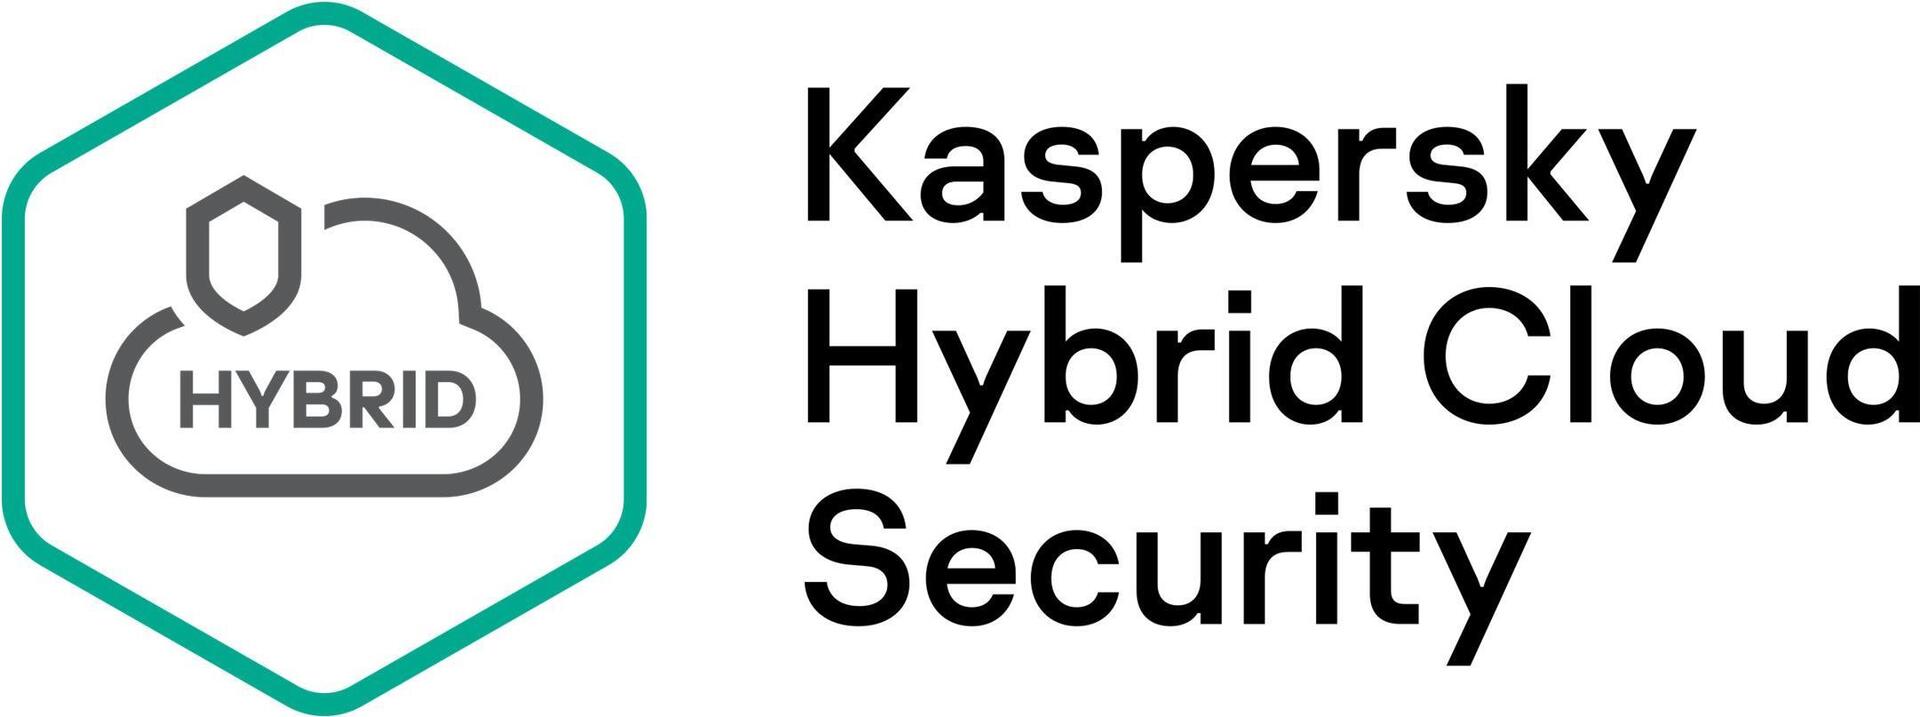 Kaspersky Hybrid Cloud Security Enterprise CPU European Edi. 50-99 CPU 2-Year Renewal License (KL4553XAQDR)